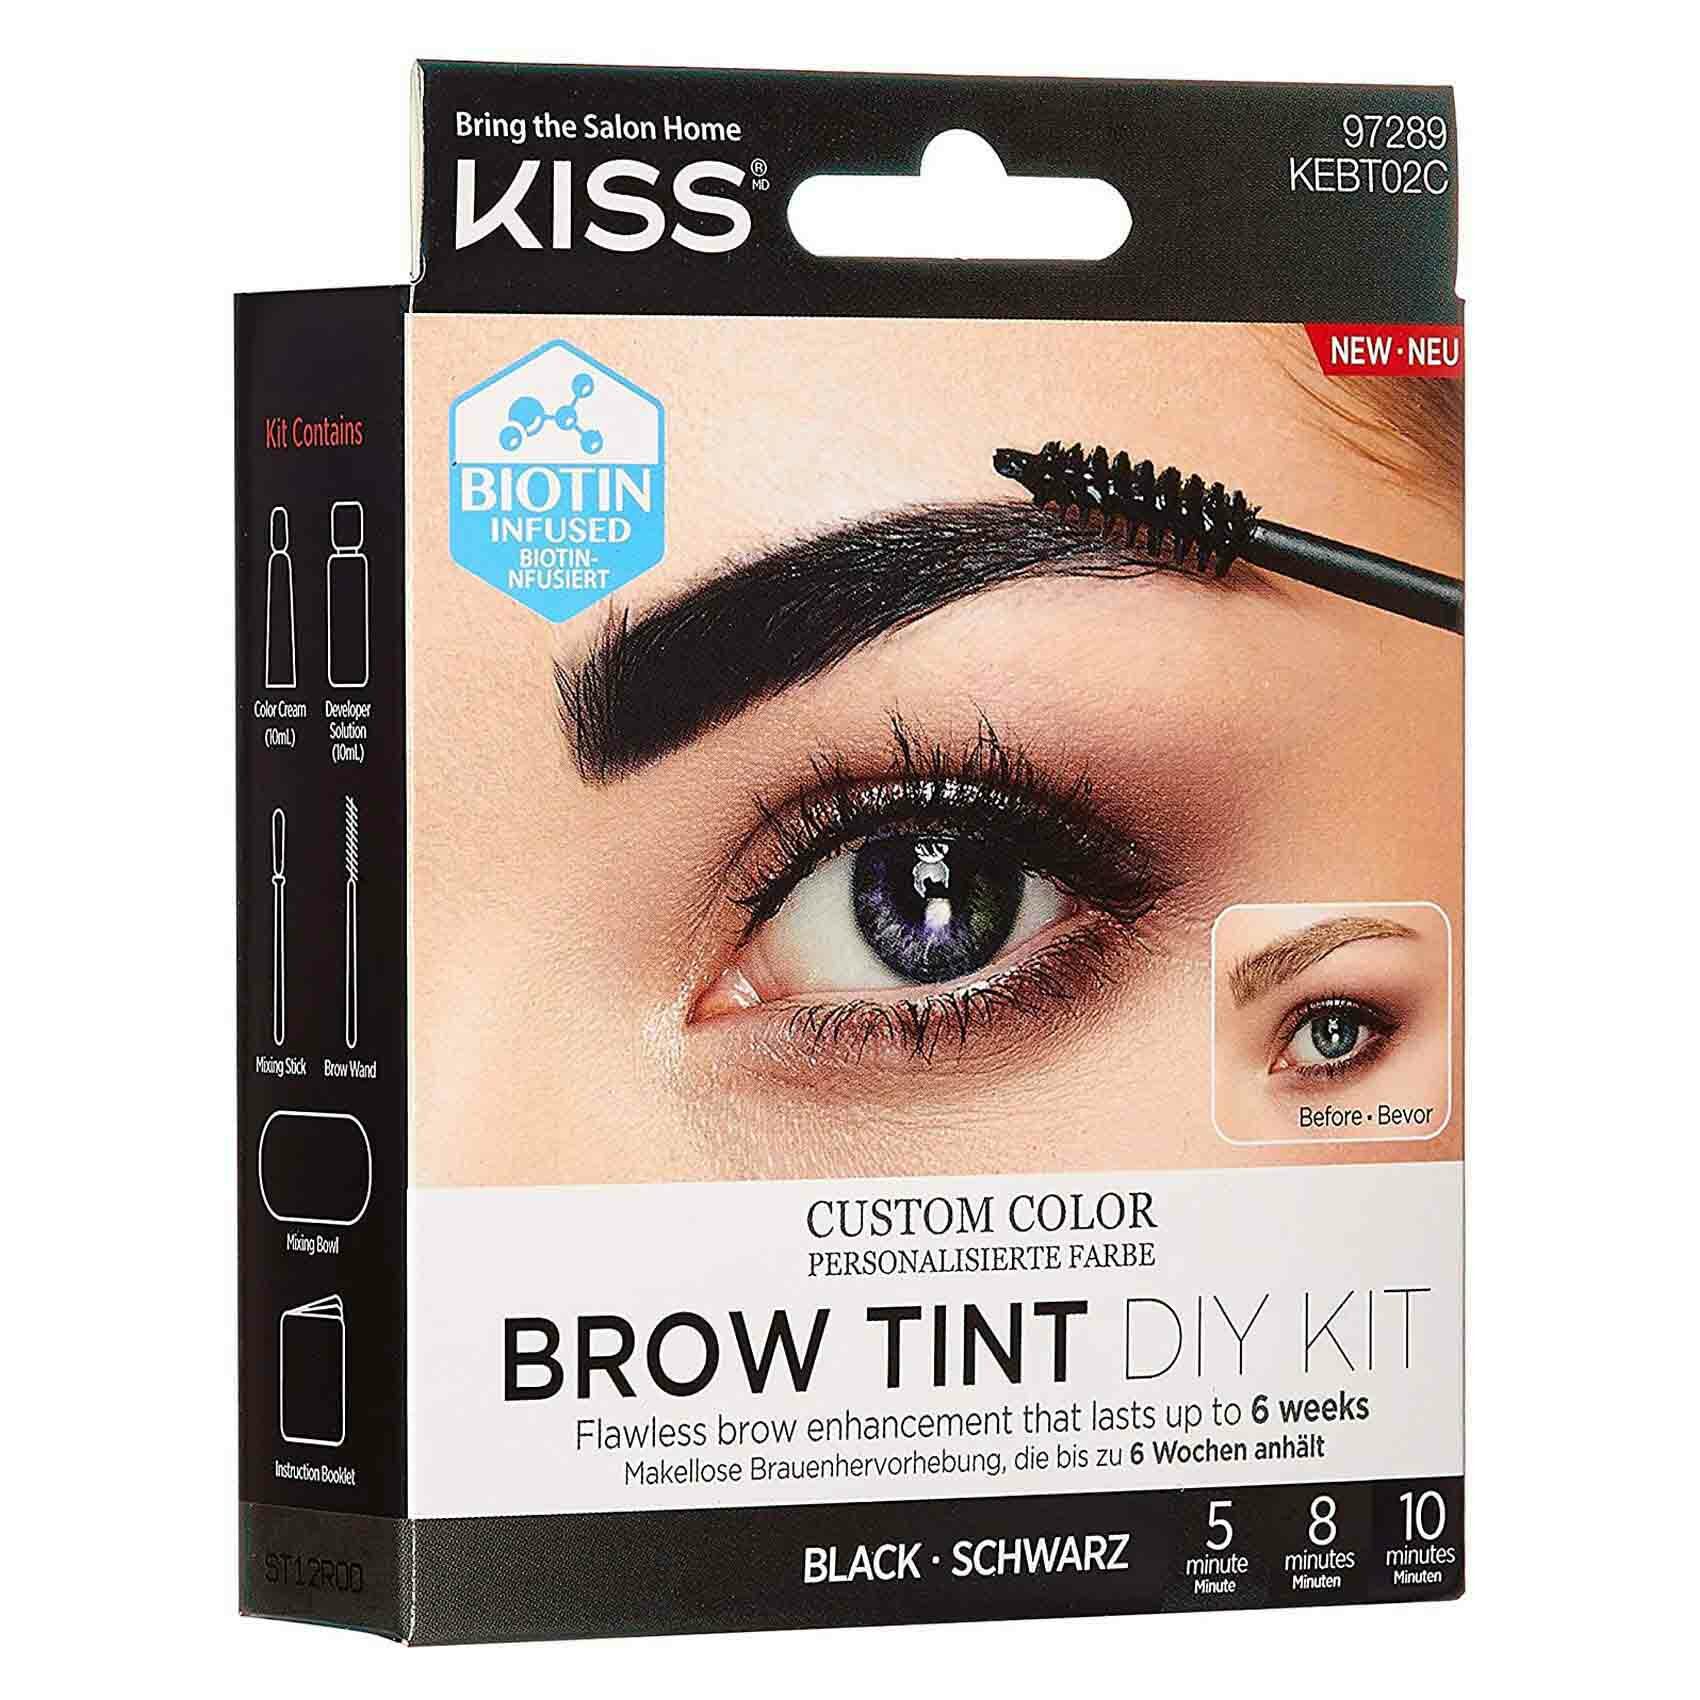 Kiss Brow Tint Diy Kit Black